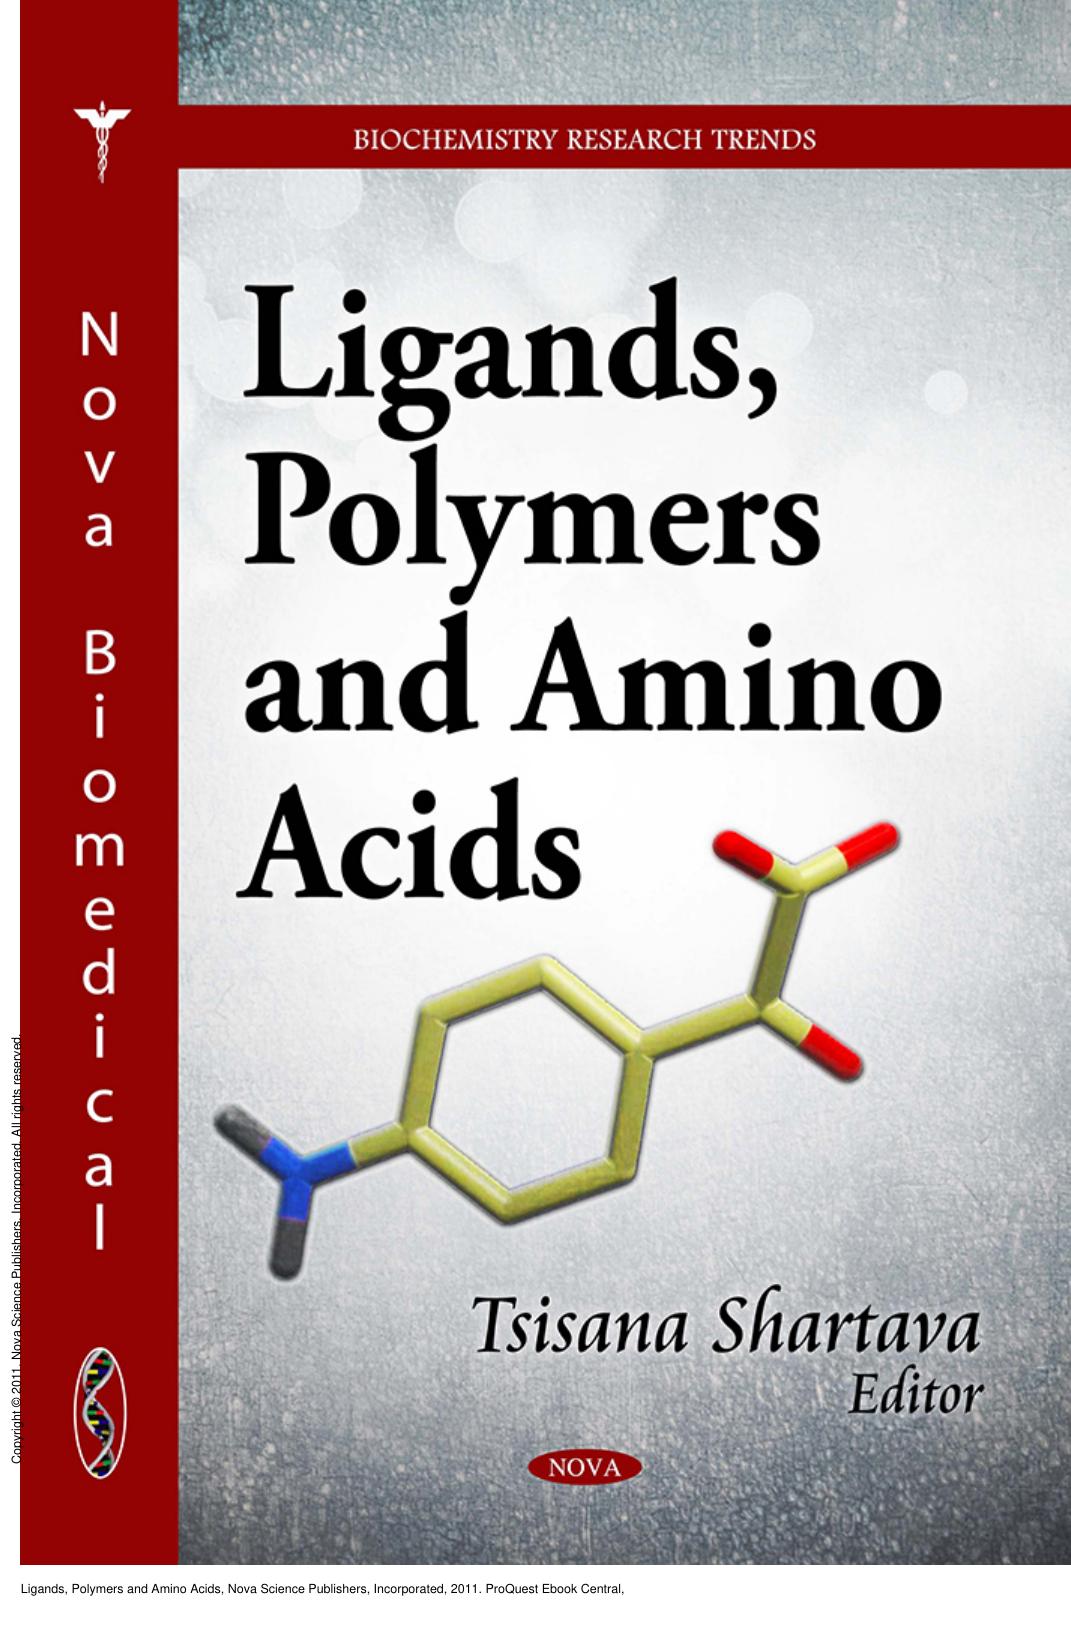 Ligands, Polymers and Amino Acids by Tsisana Shartava